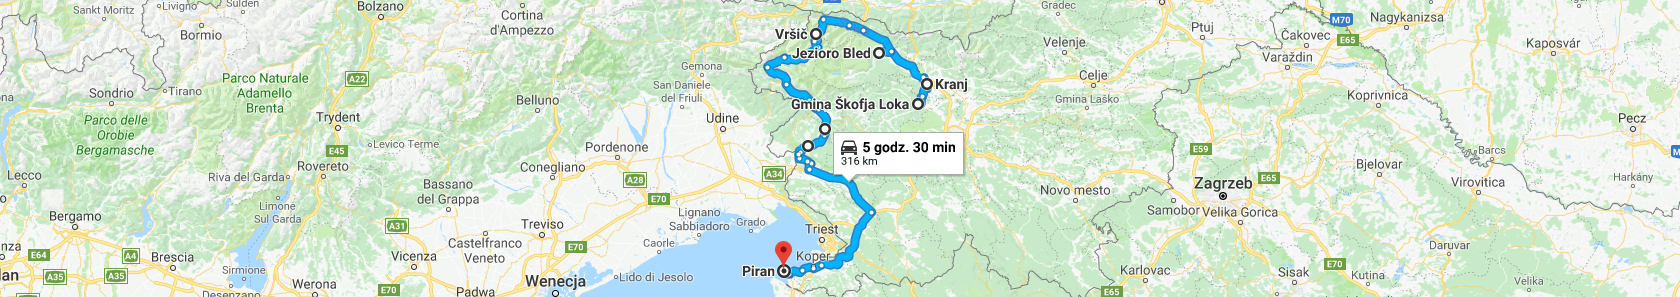 Trasa - Kranj, Škofja Loka, Jezioro Bled, przełęcz Vršič i Piran